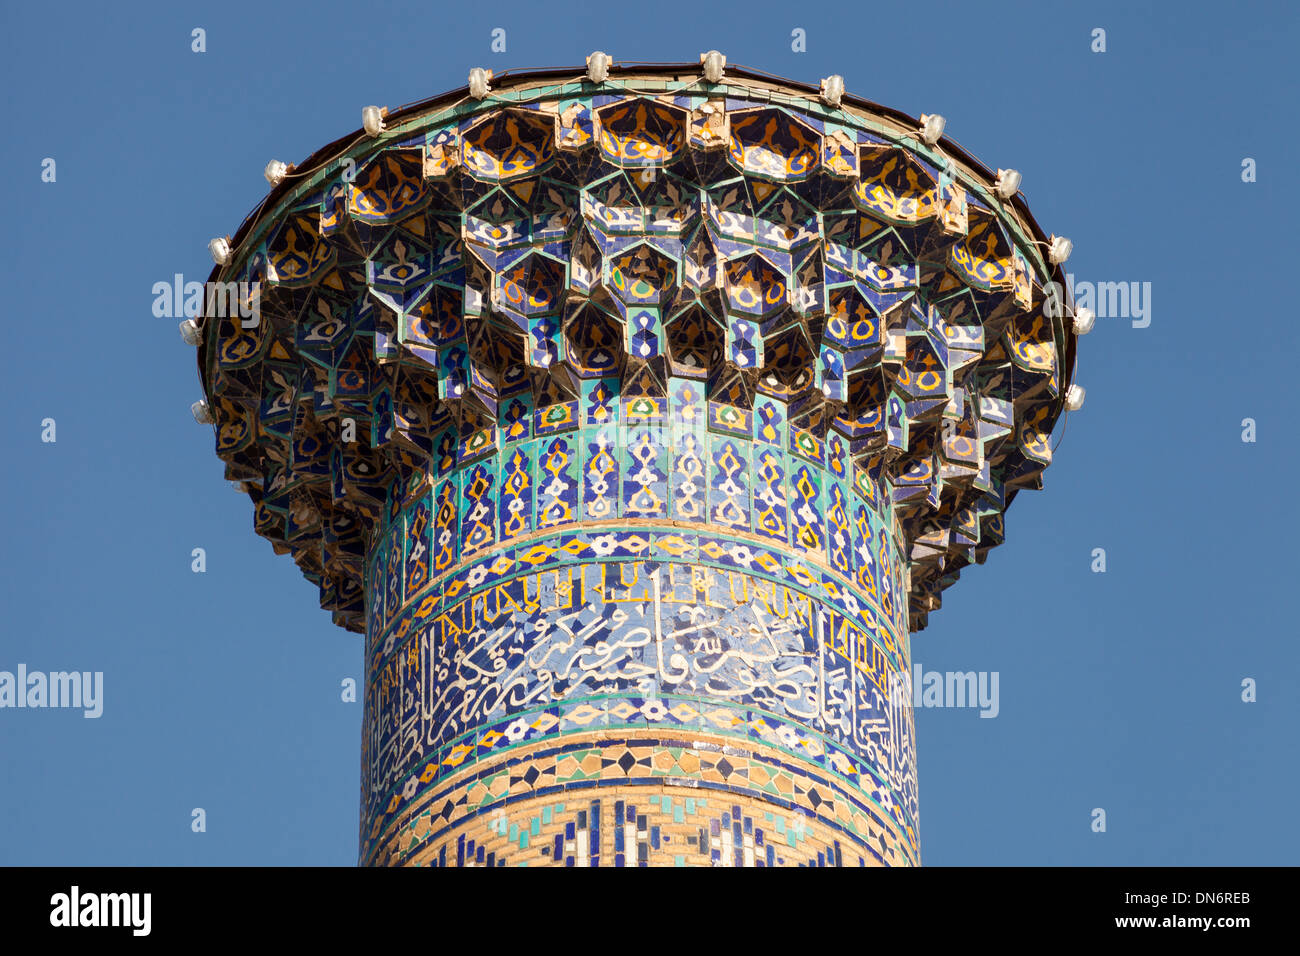 Top of a minaret, Ulugh Beg Madrasah, also known as Ulugbek Madrasah, Registan Square, Samarkand, Uzbekistan Stock Photo